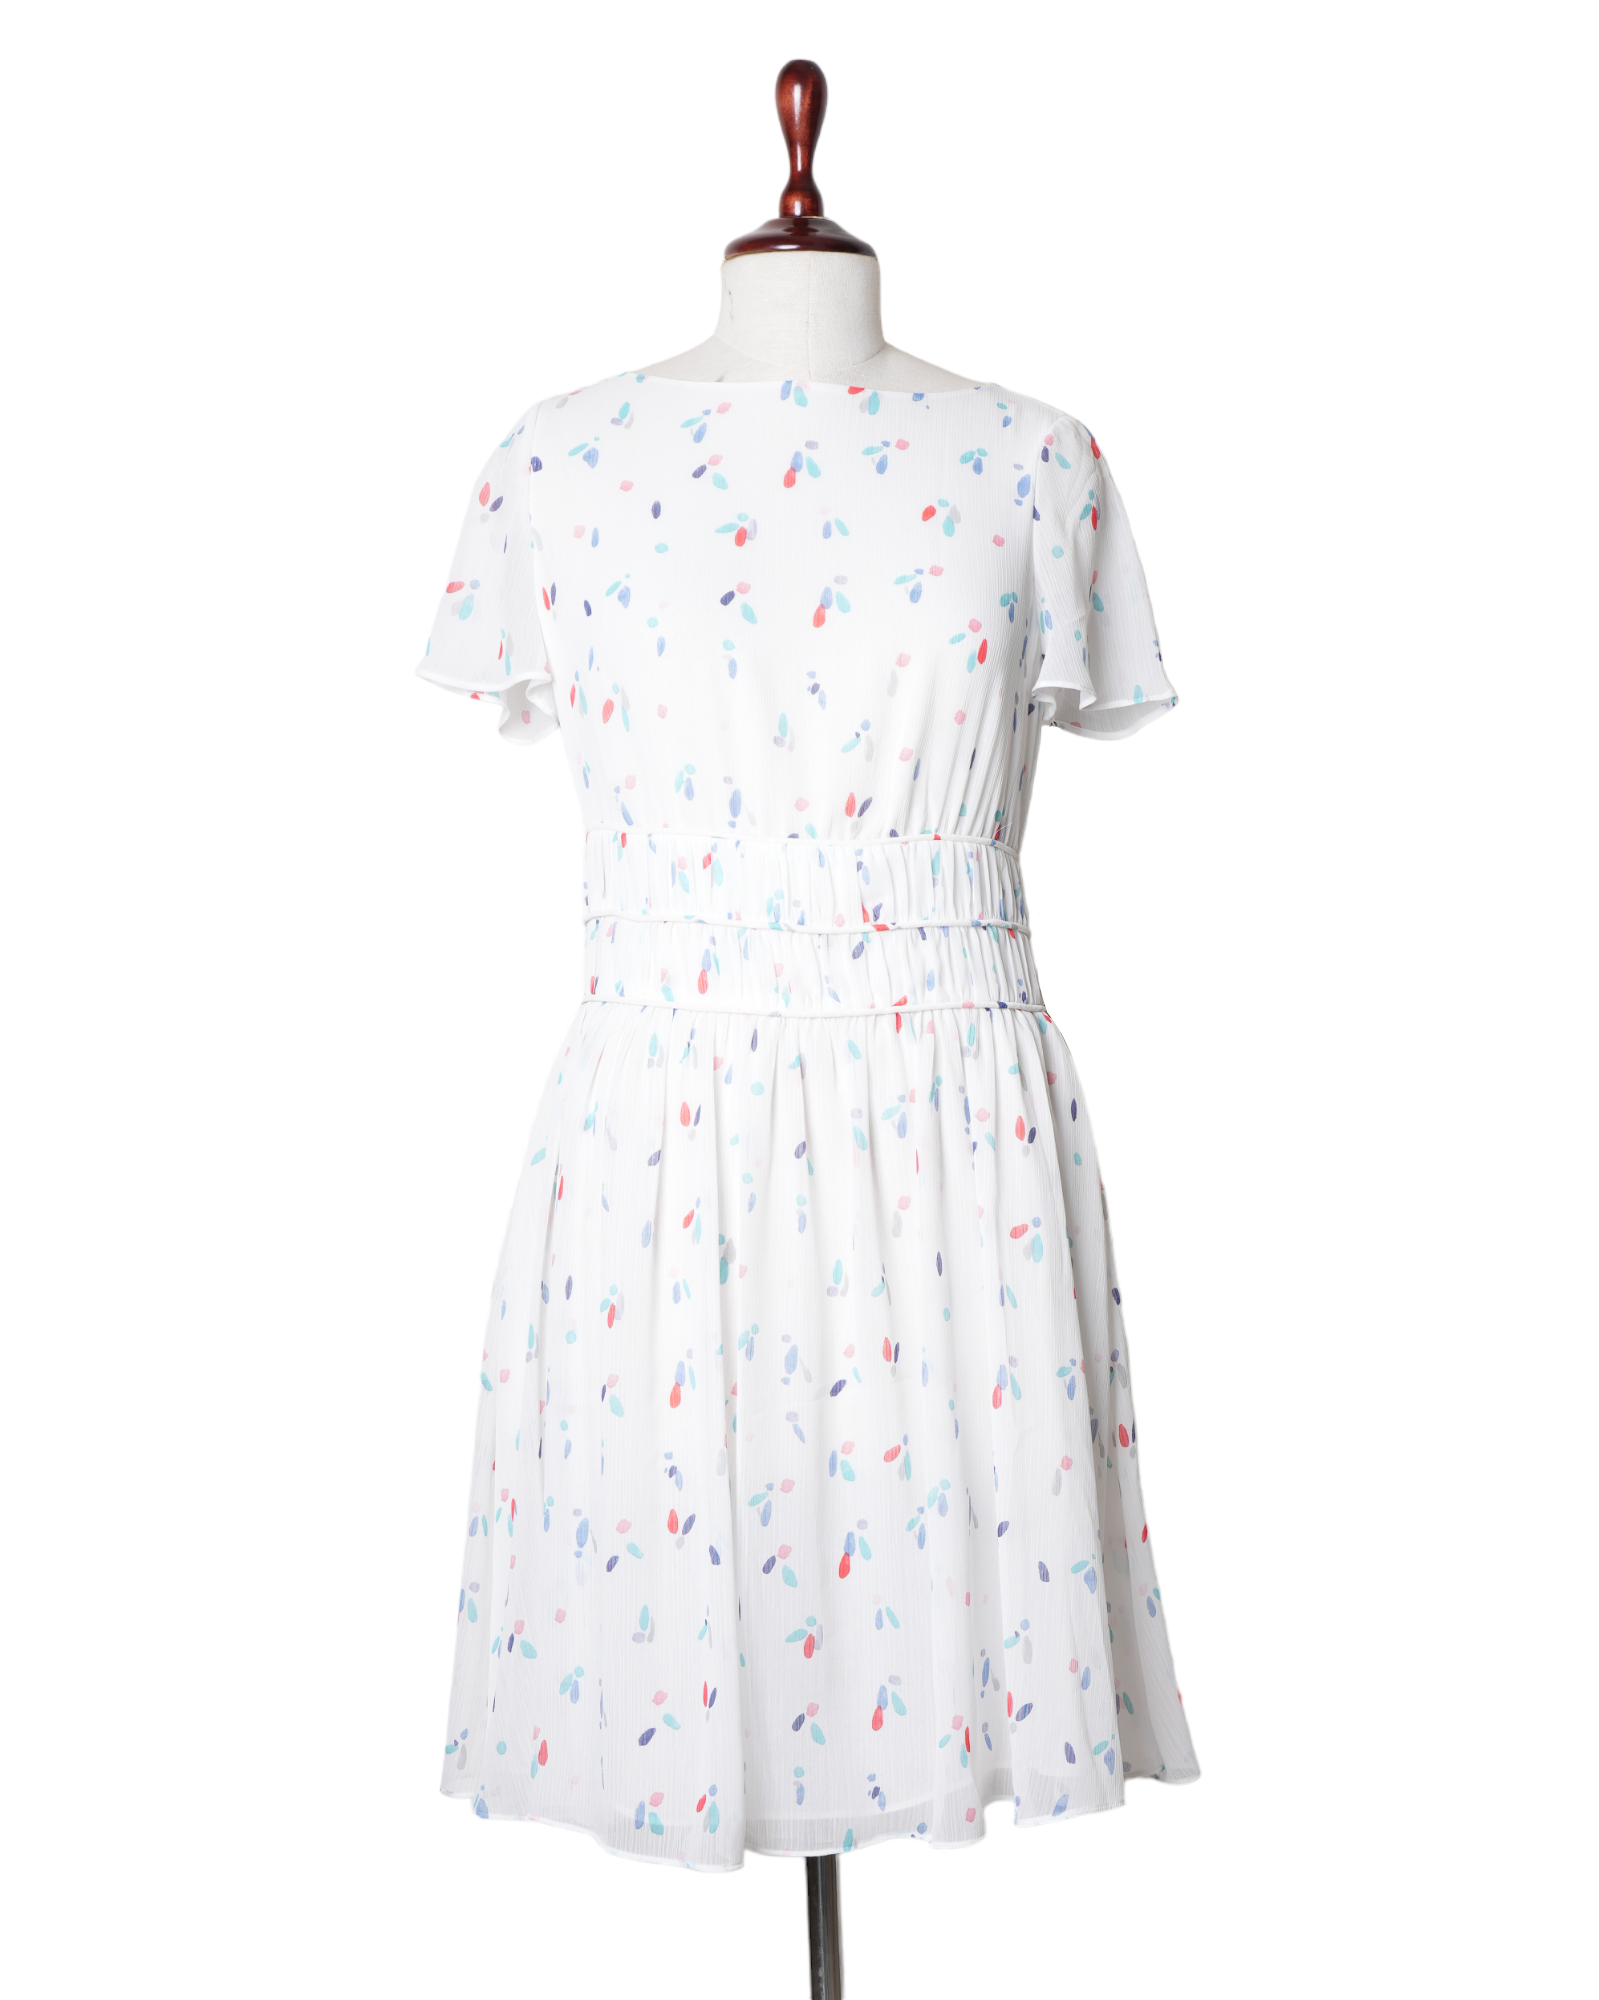 New Emporio Armani White Dress